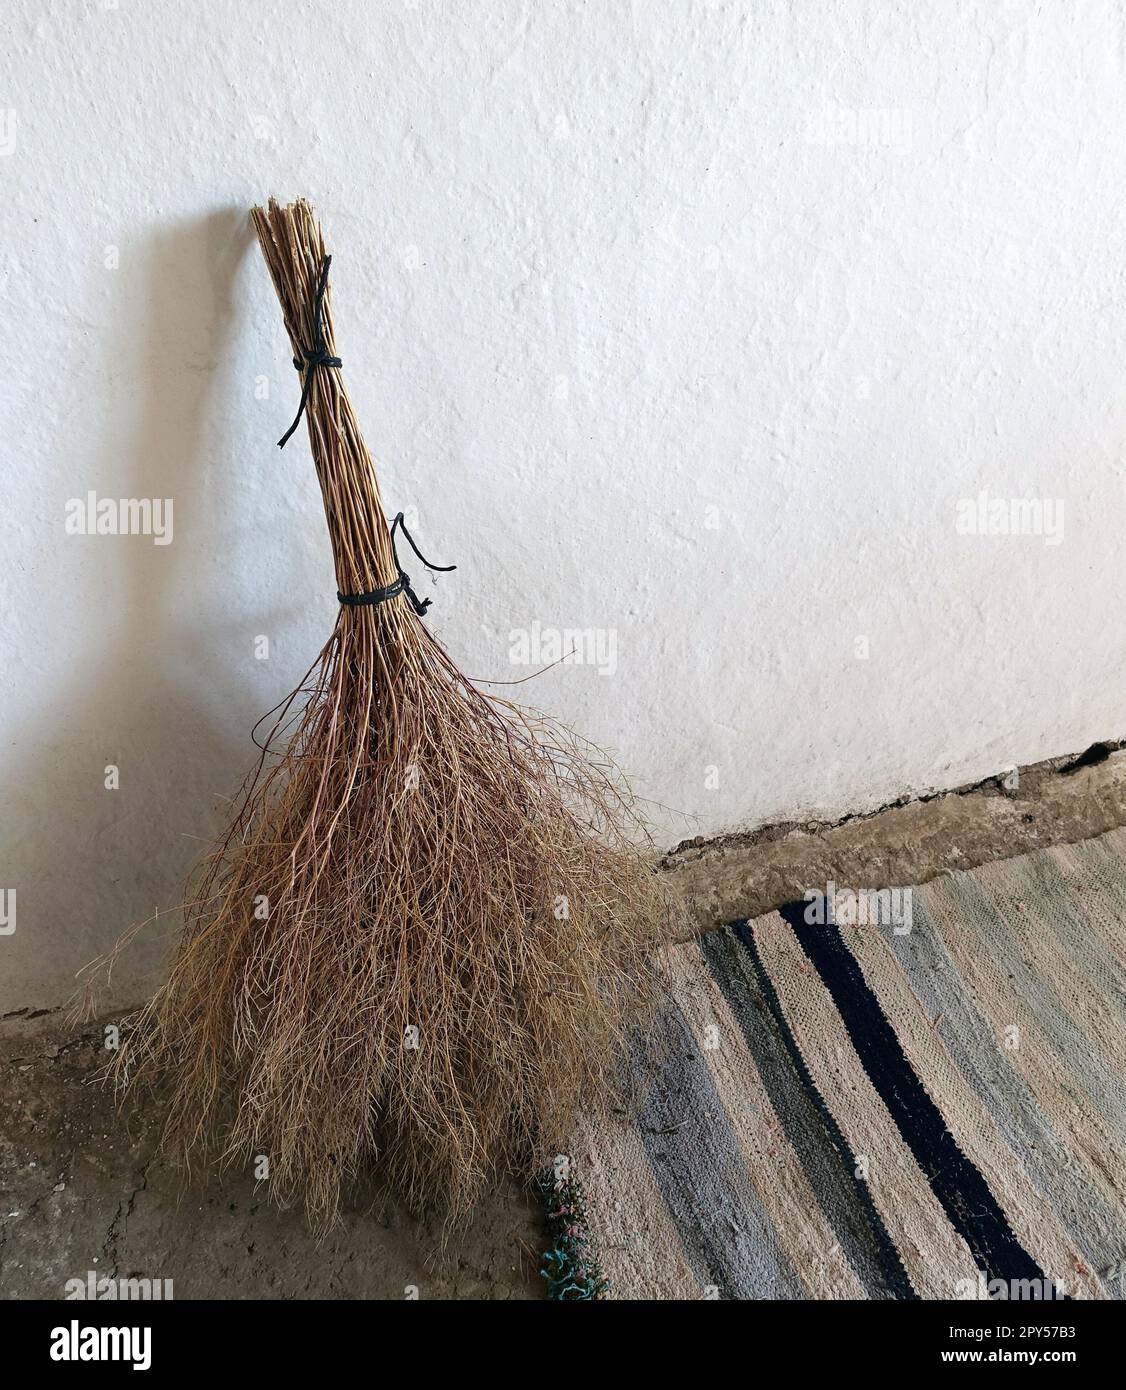 https://c8.alamy.com/comp/2PY57B3/hand-woven-classic-carpet-and-handmade-grass-broom-classic-village-household-items-2PY57B3.jpg